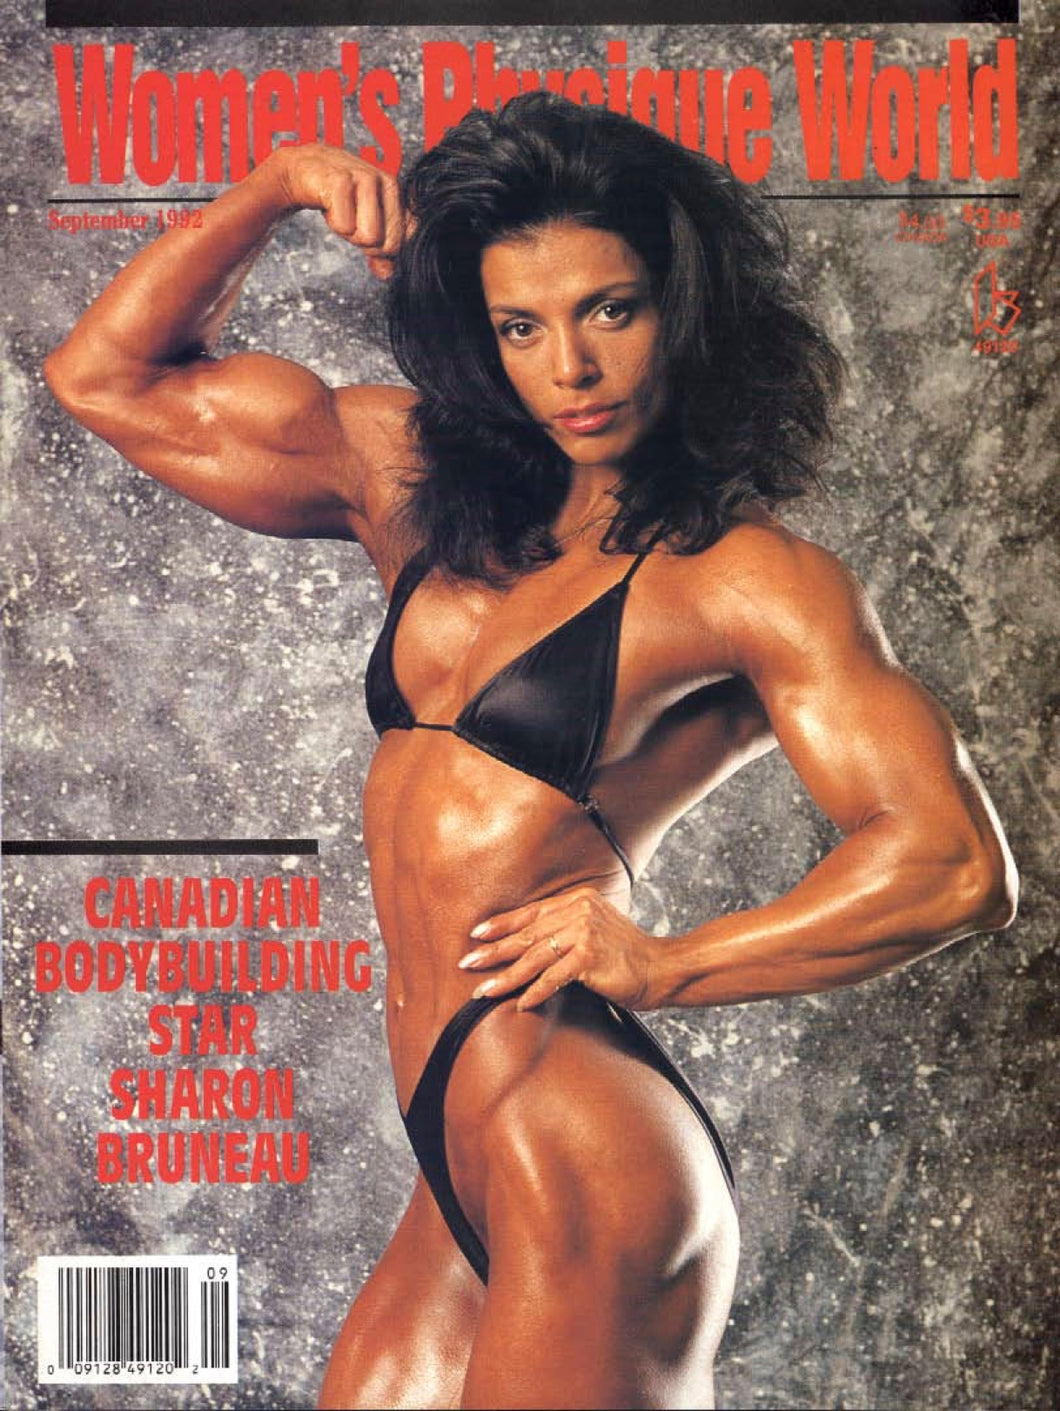 WPW September 1992 Magazine Issue
 [Digital Download]